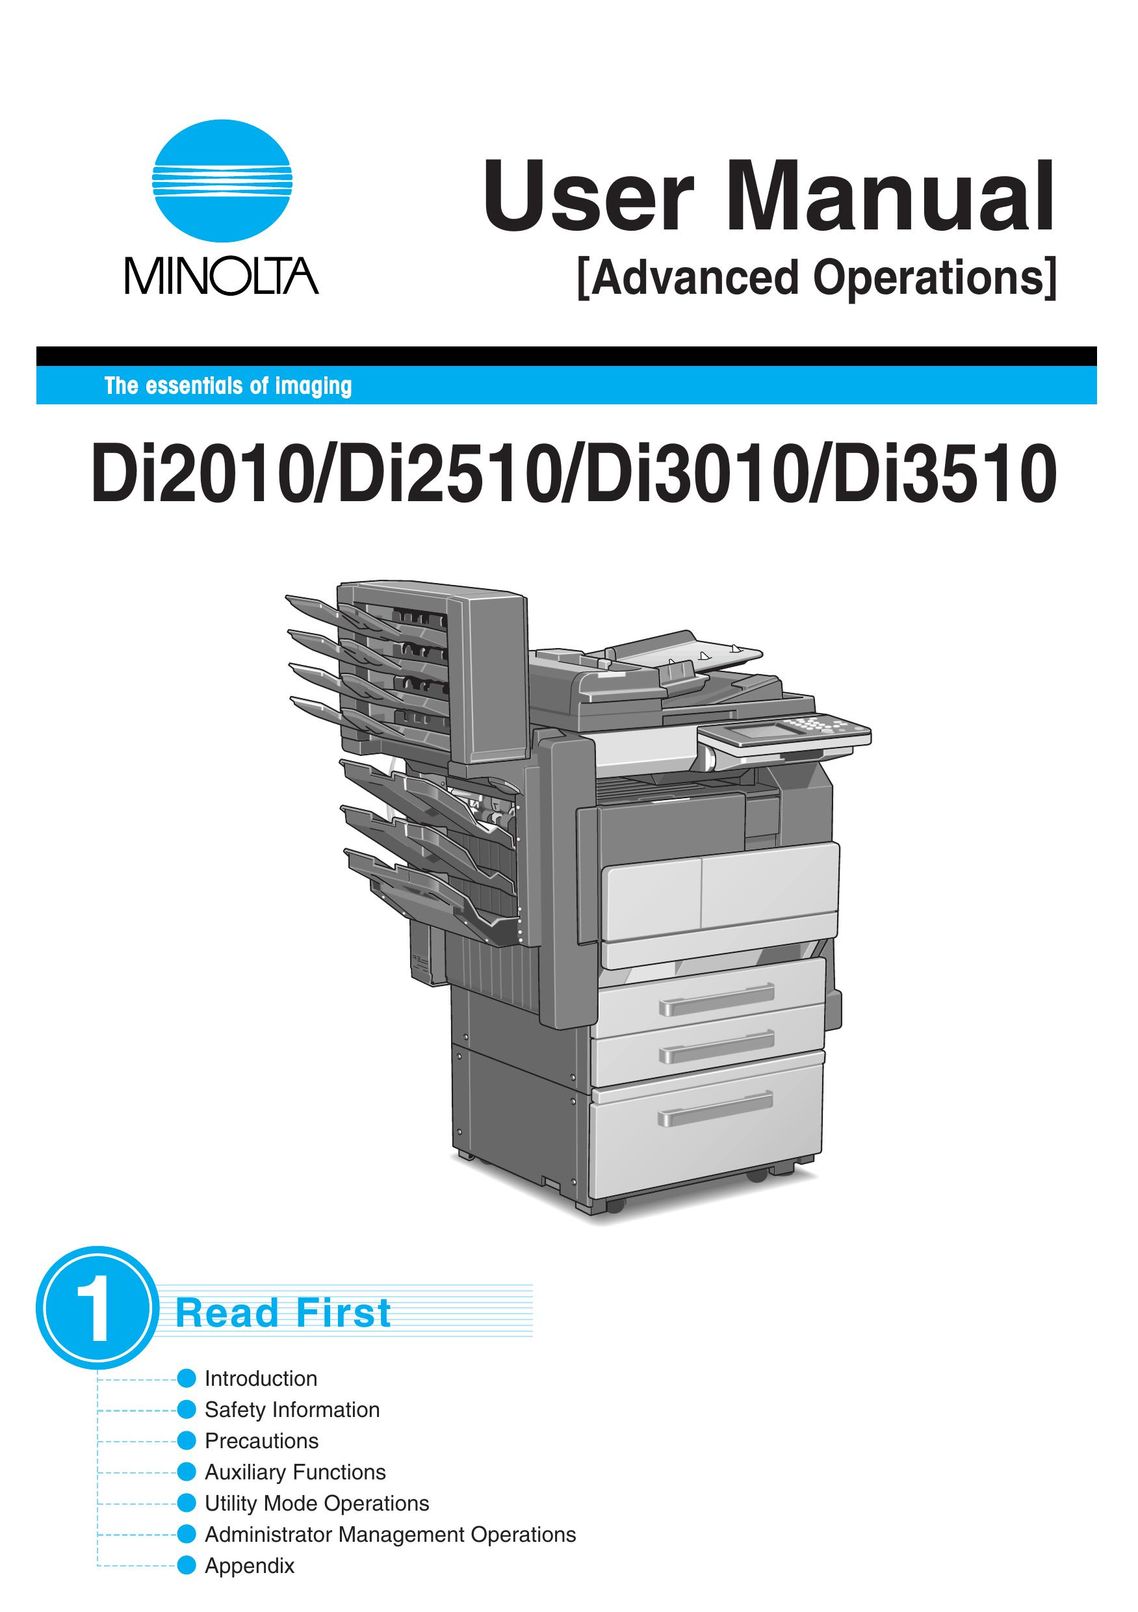 Minolta DI2510 All in One Printer User Manual